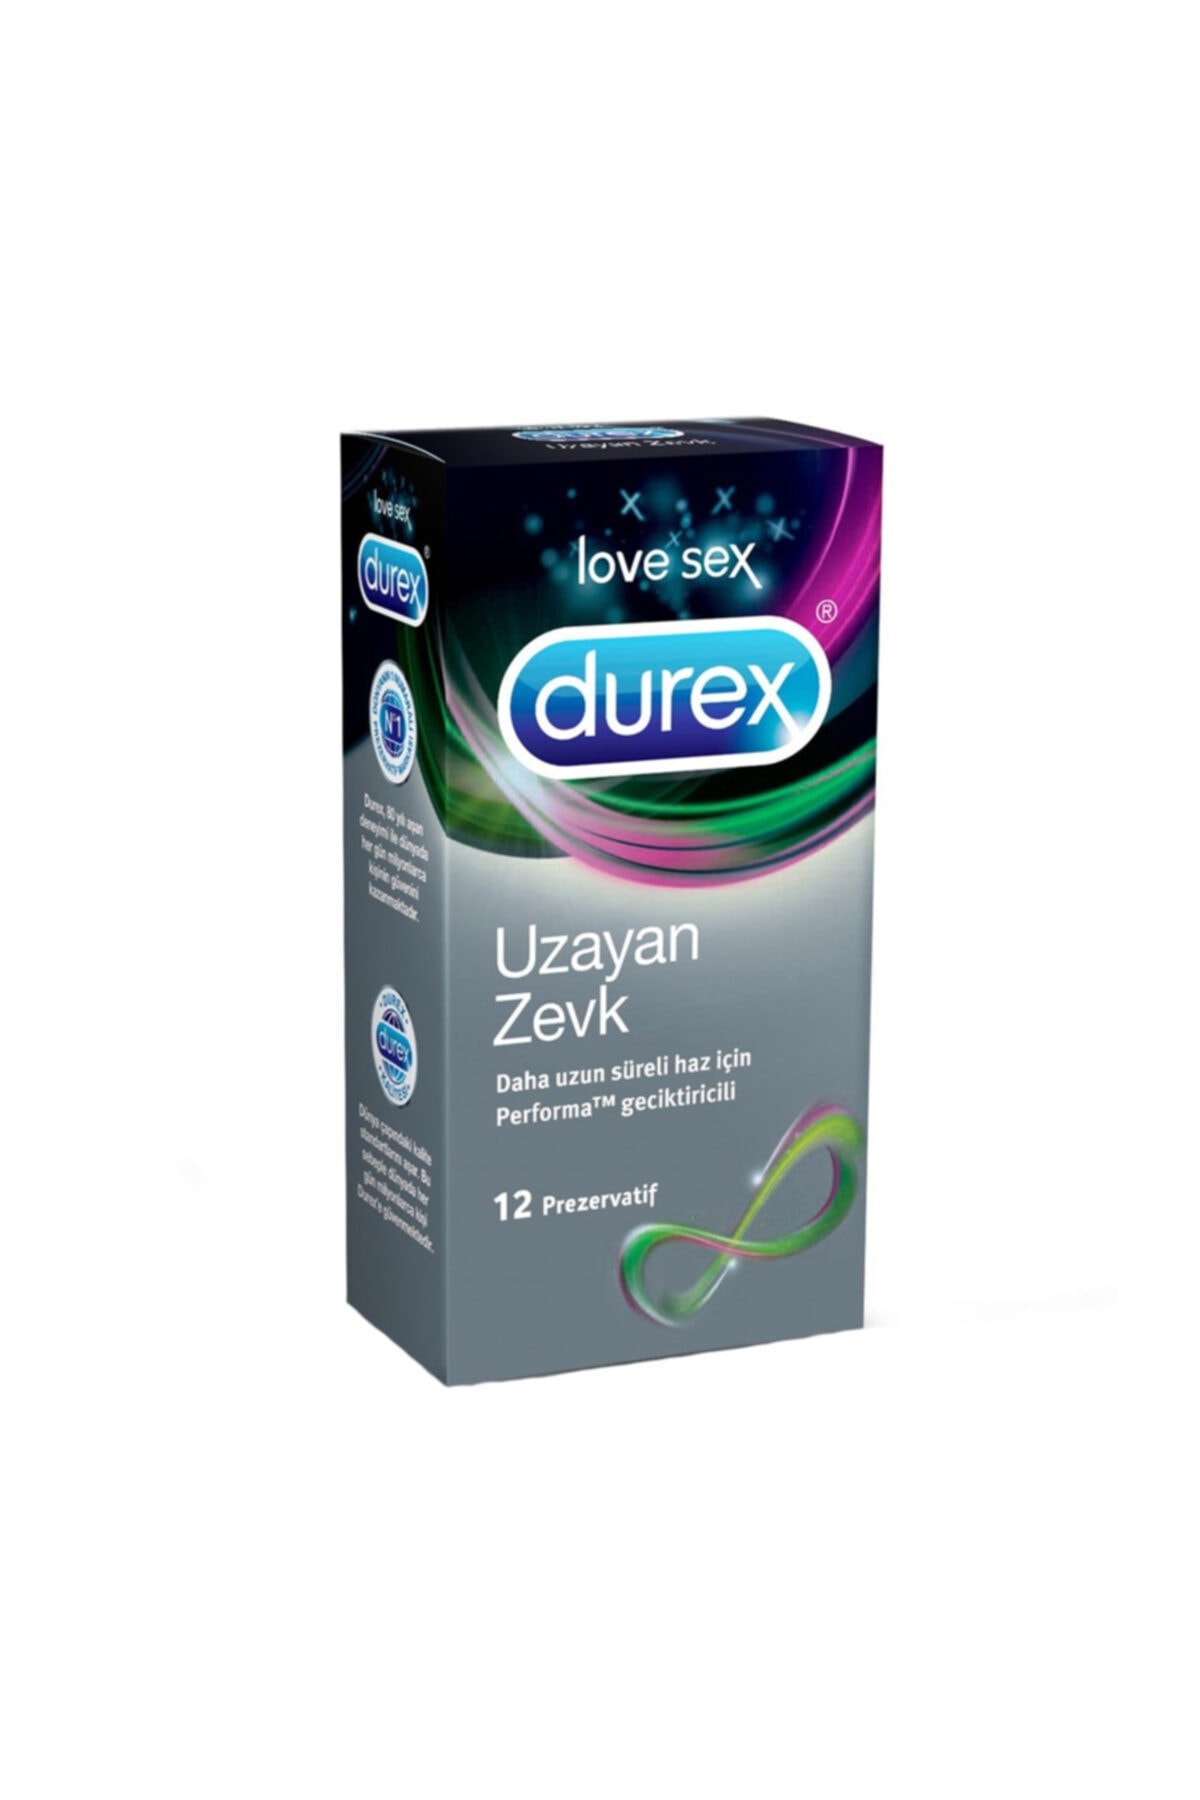 Durex - Durex Uzayan Zevk Prezervatif 12'li